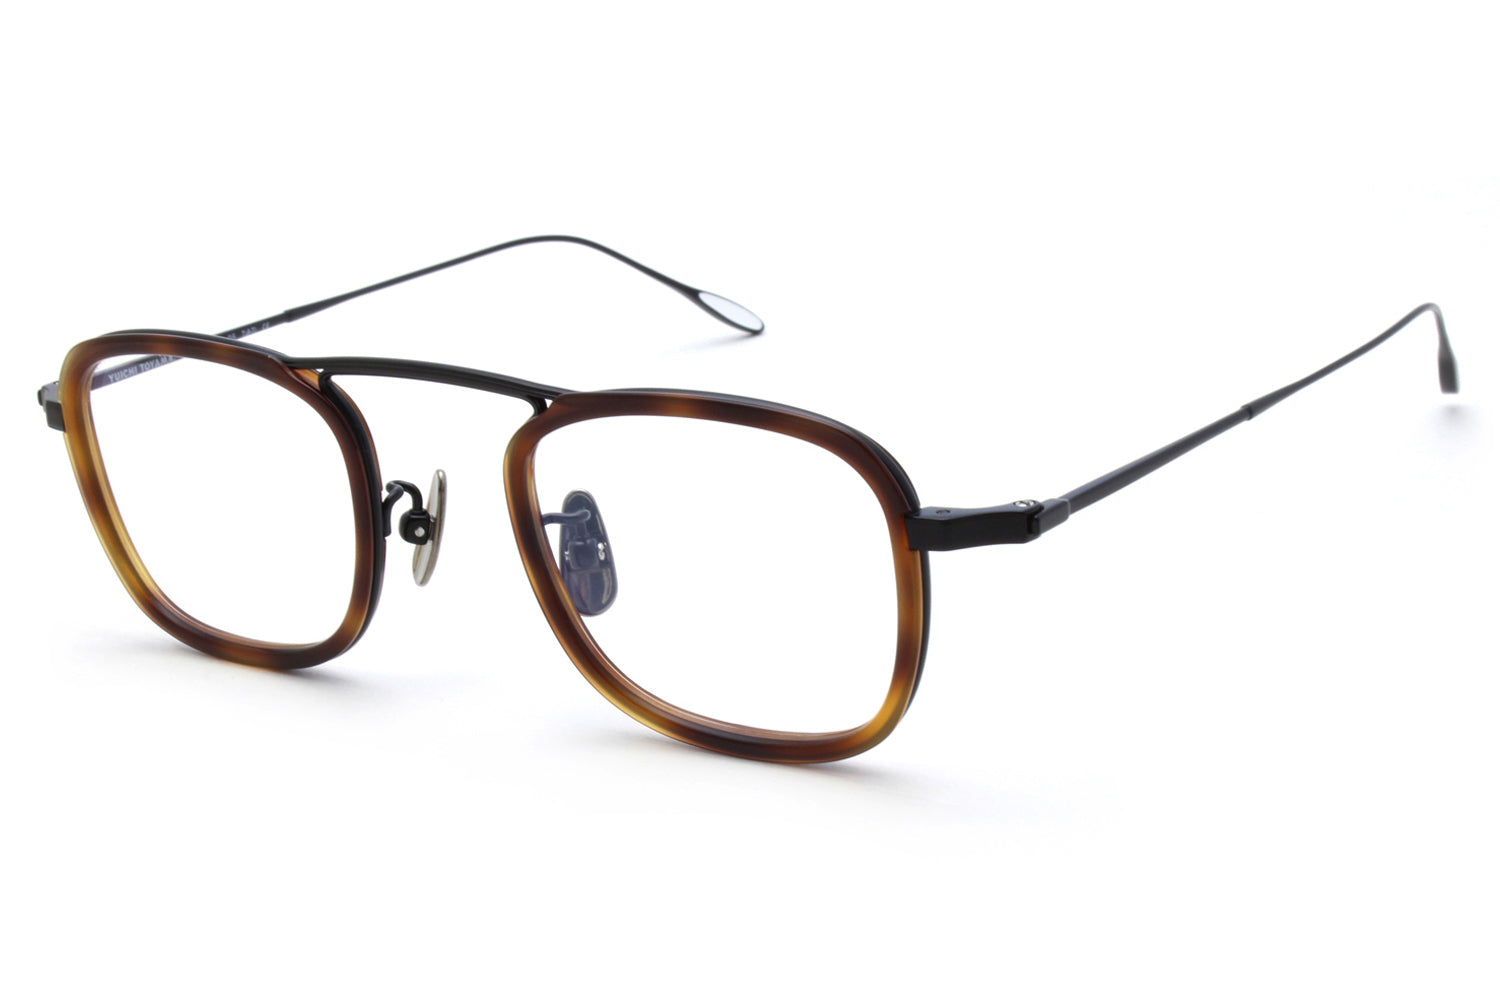 Yuichi Toyama - F. Walter (U-130) Eyeglasses | Specs Collective